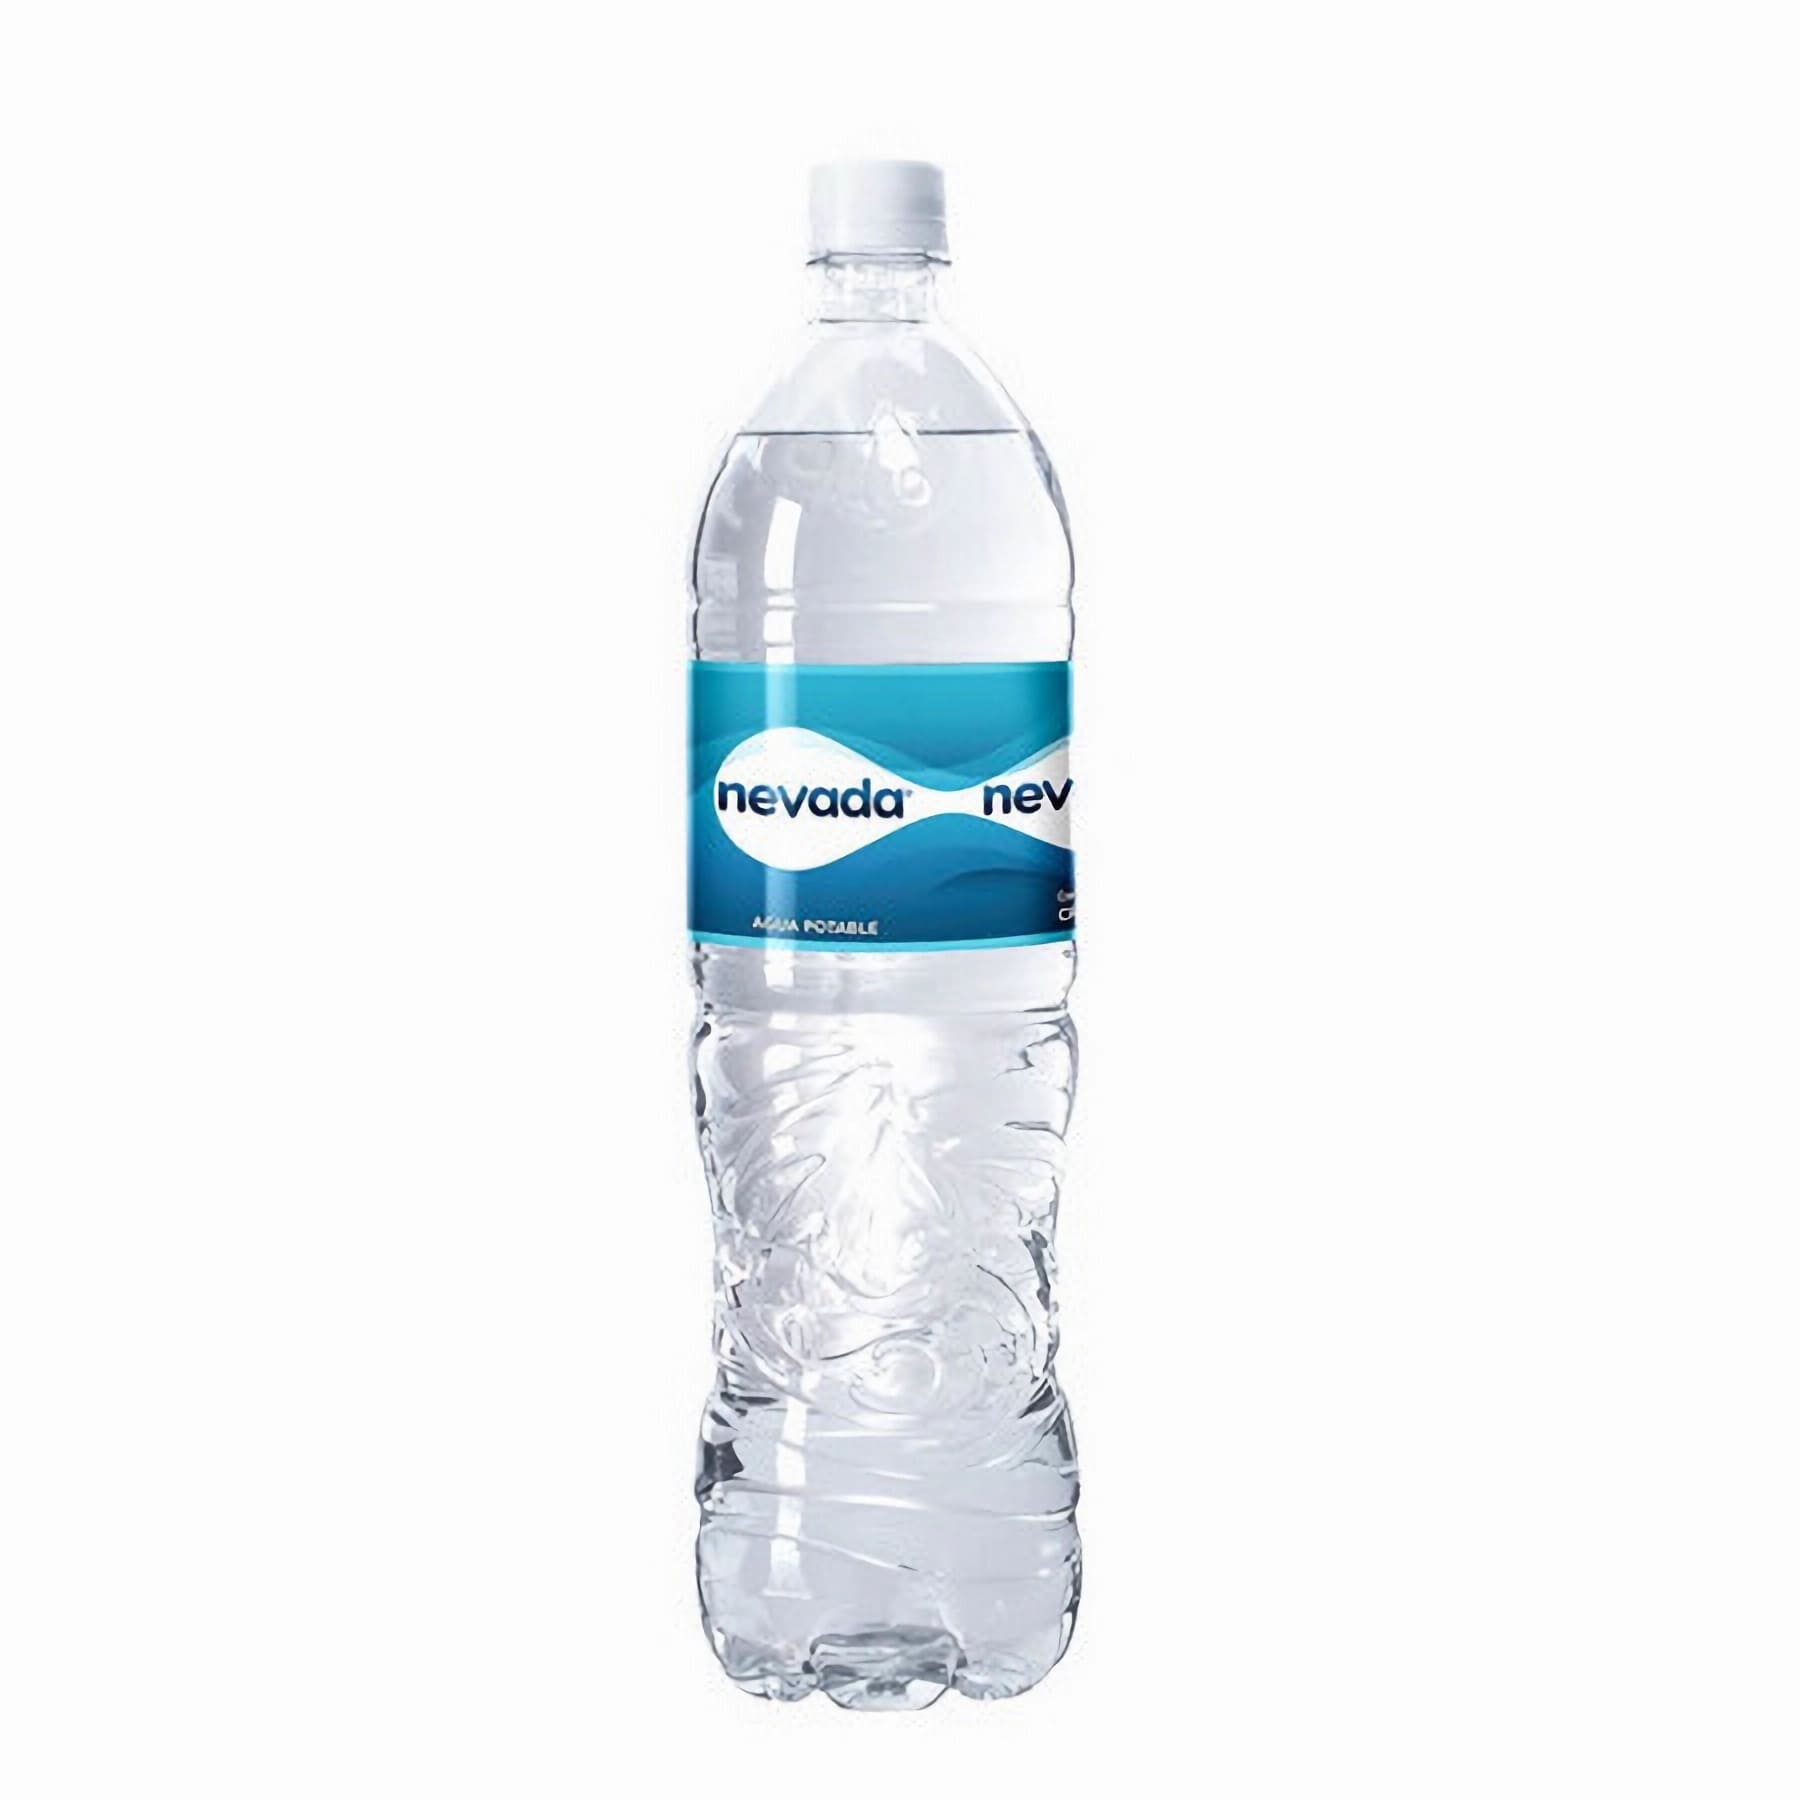 Agua mineral Nevada 5 Litros - Farma Prime